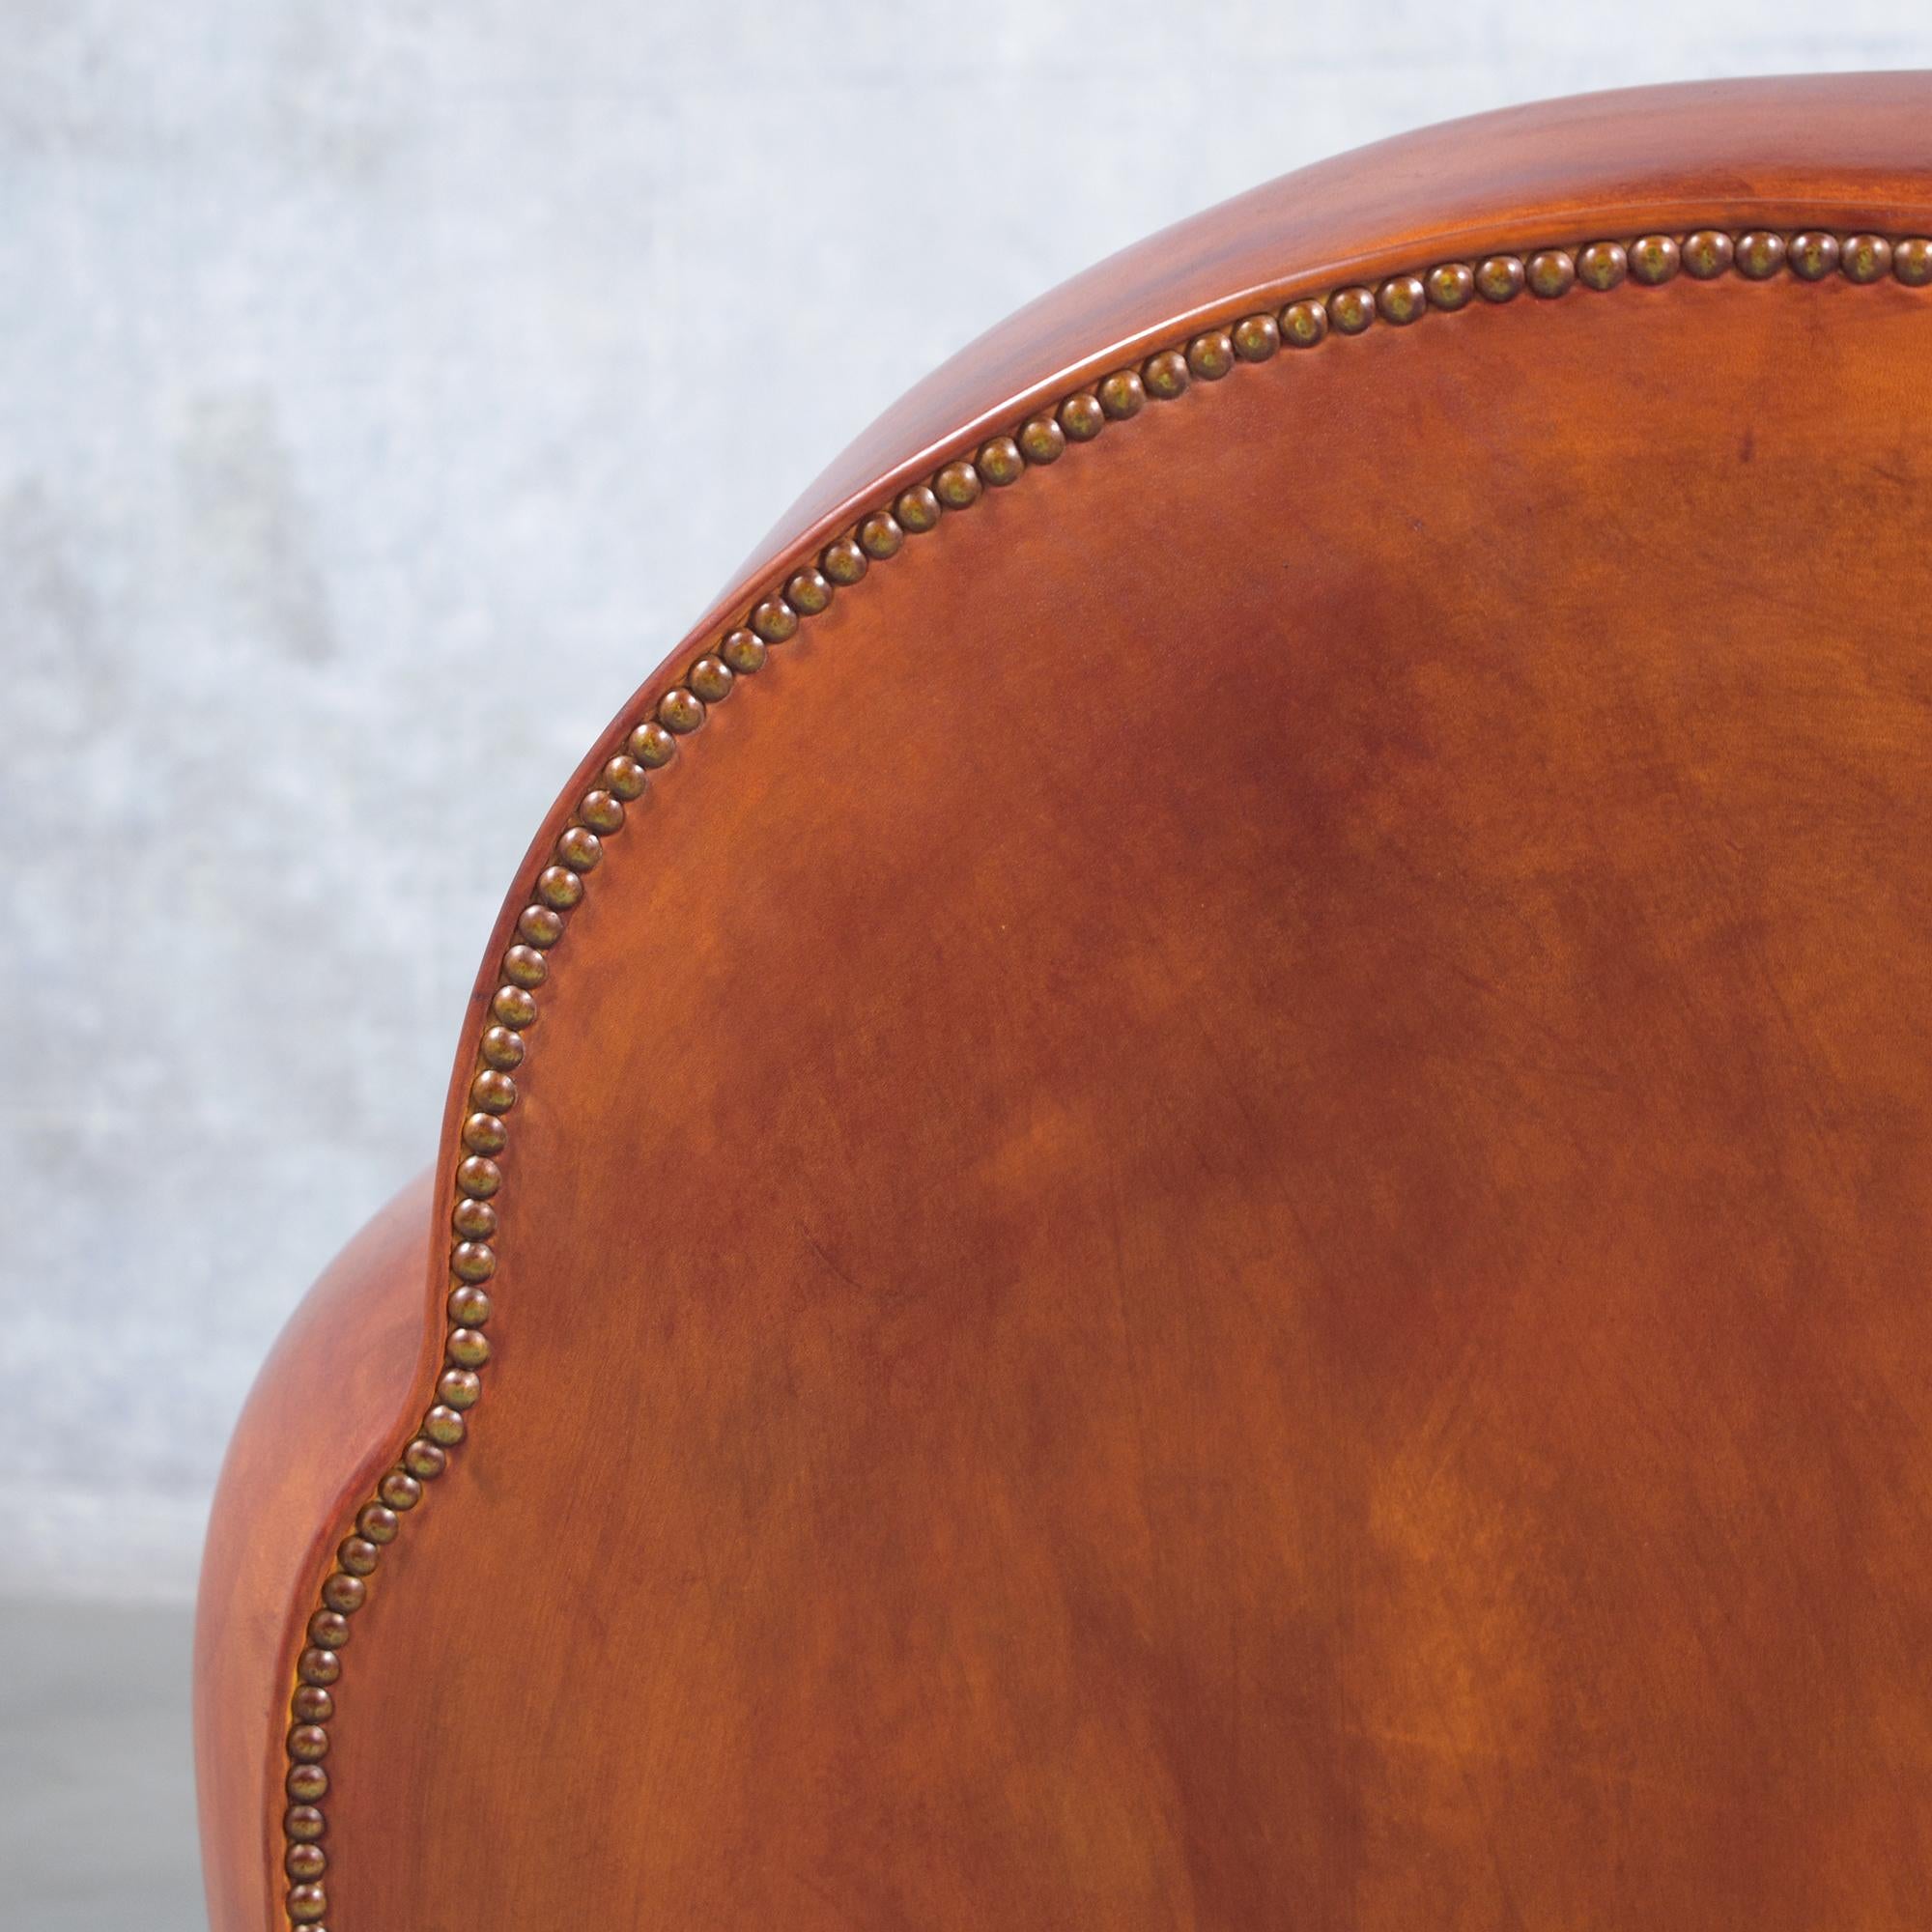 Restored Art Deco Club Chairs: 1960s French Deco Elegance 10